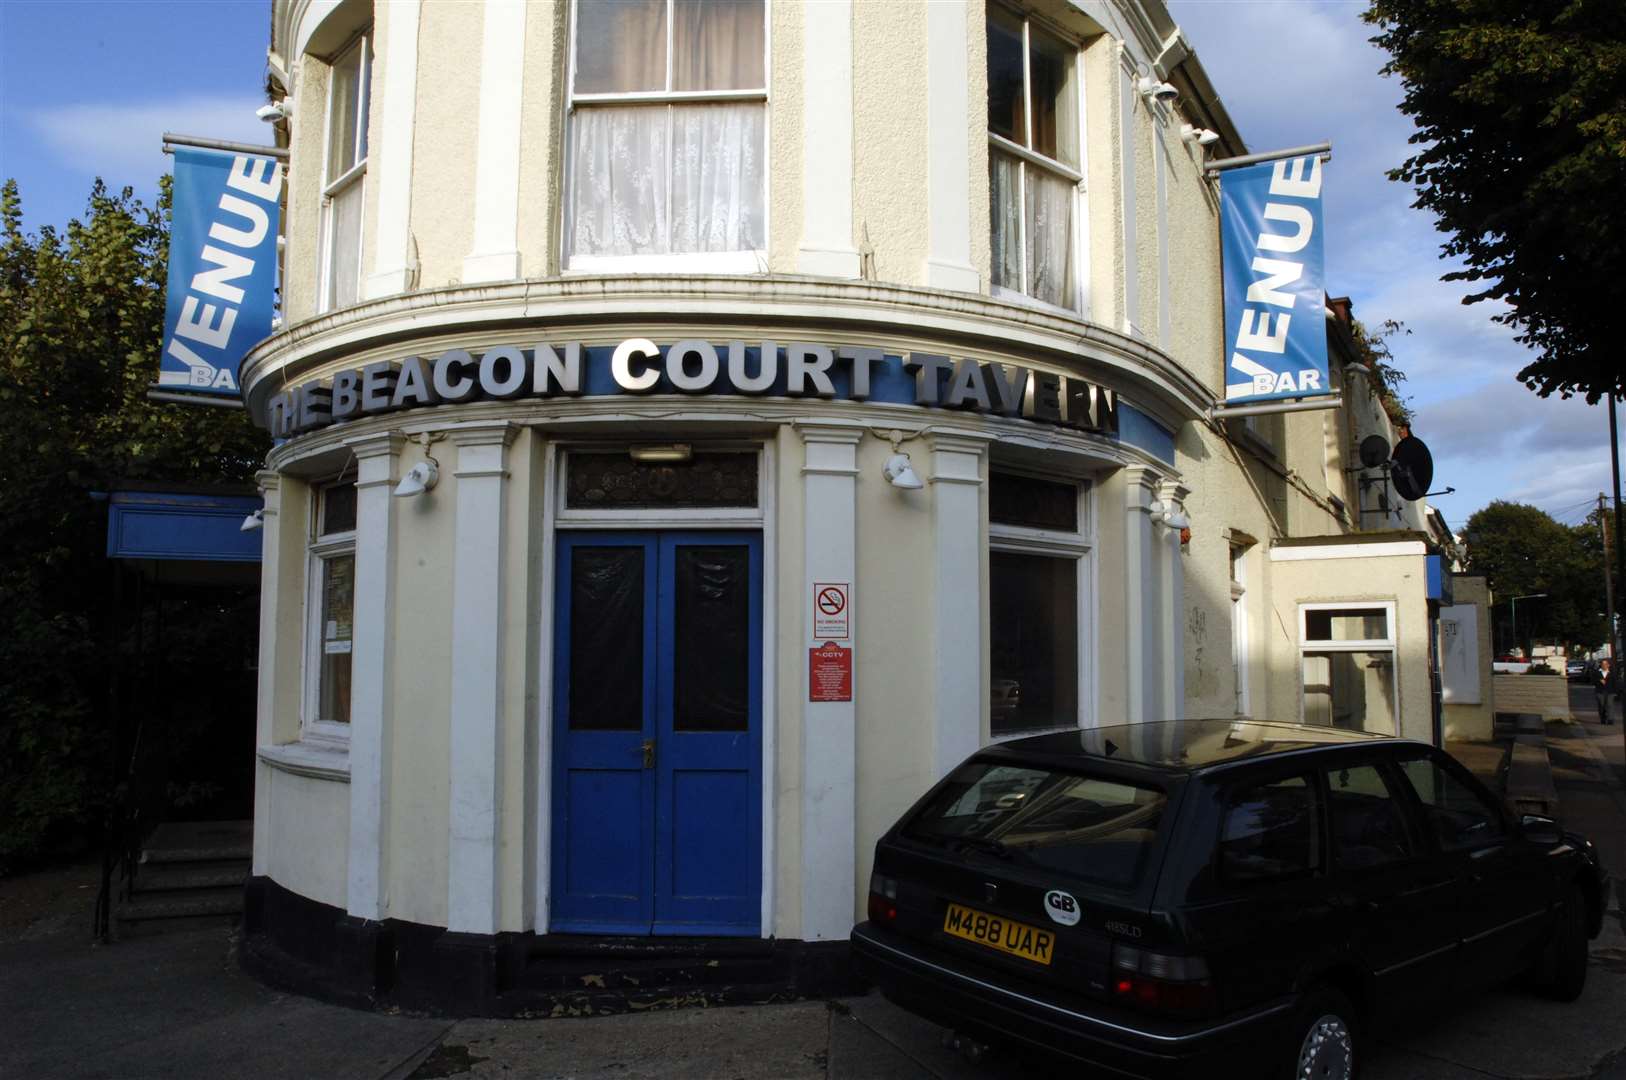 The Beacon Court Tavern